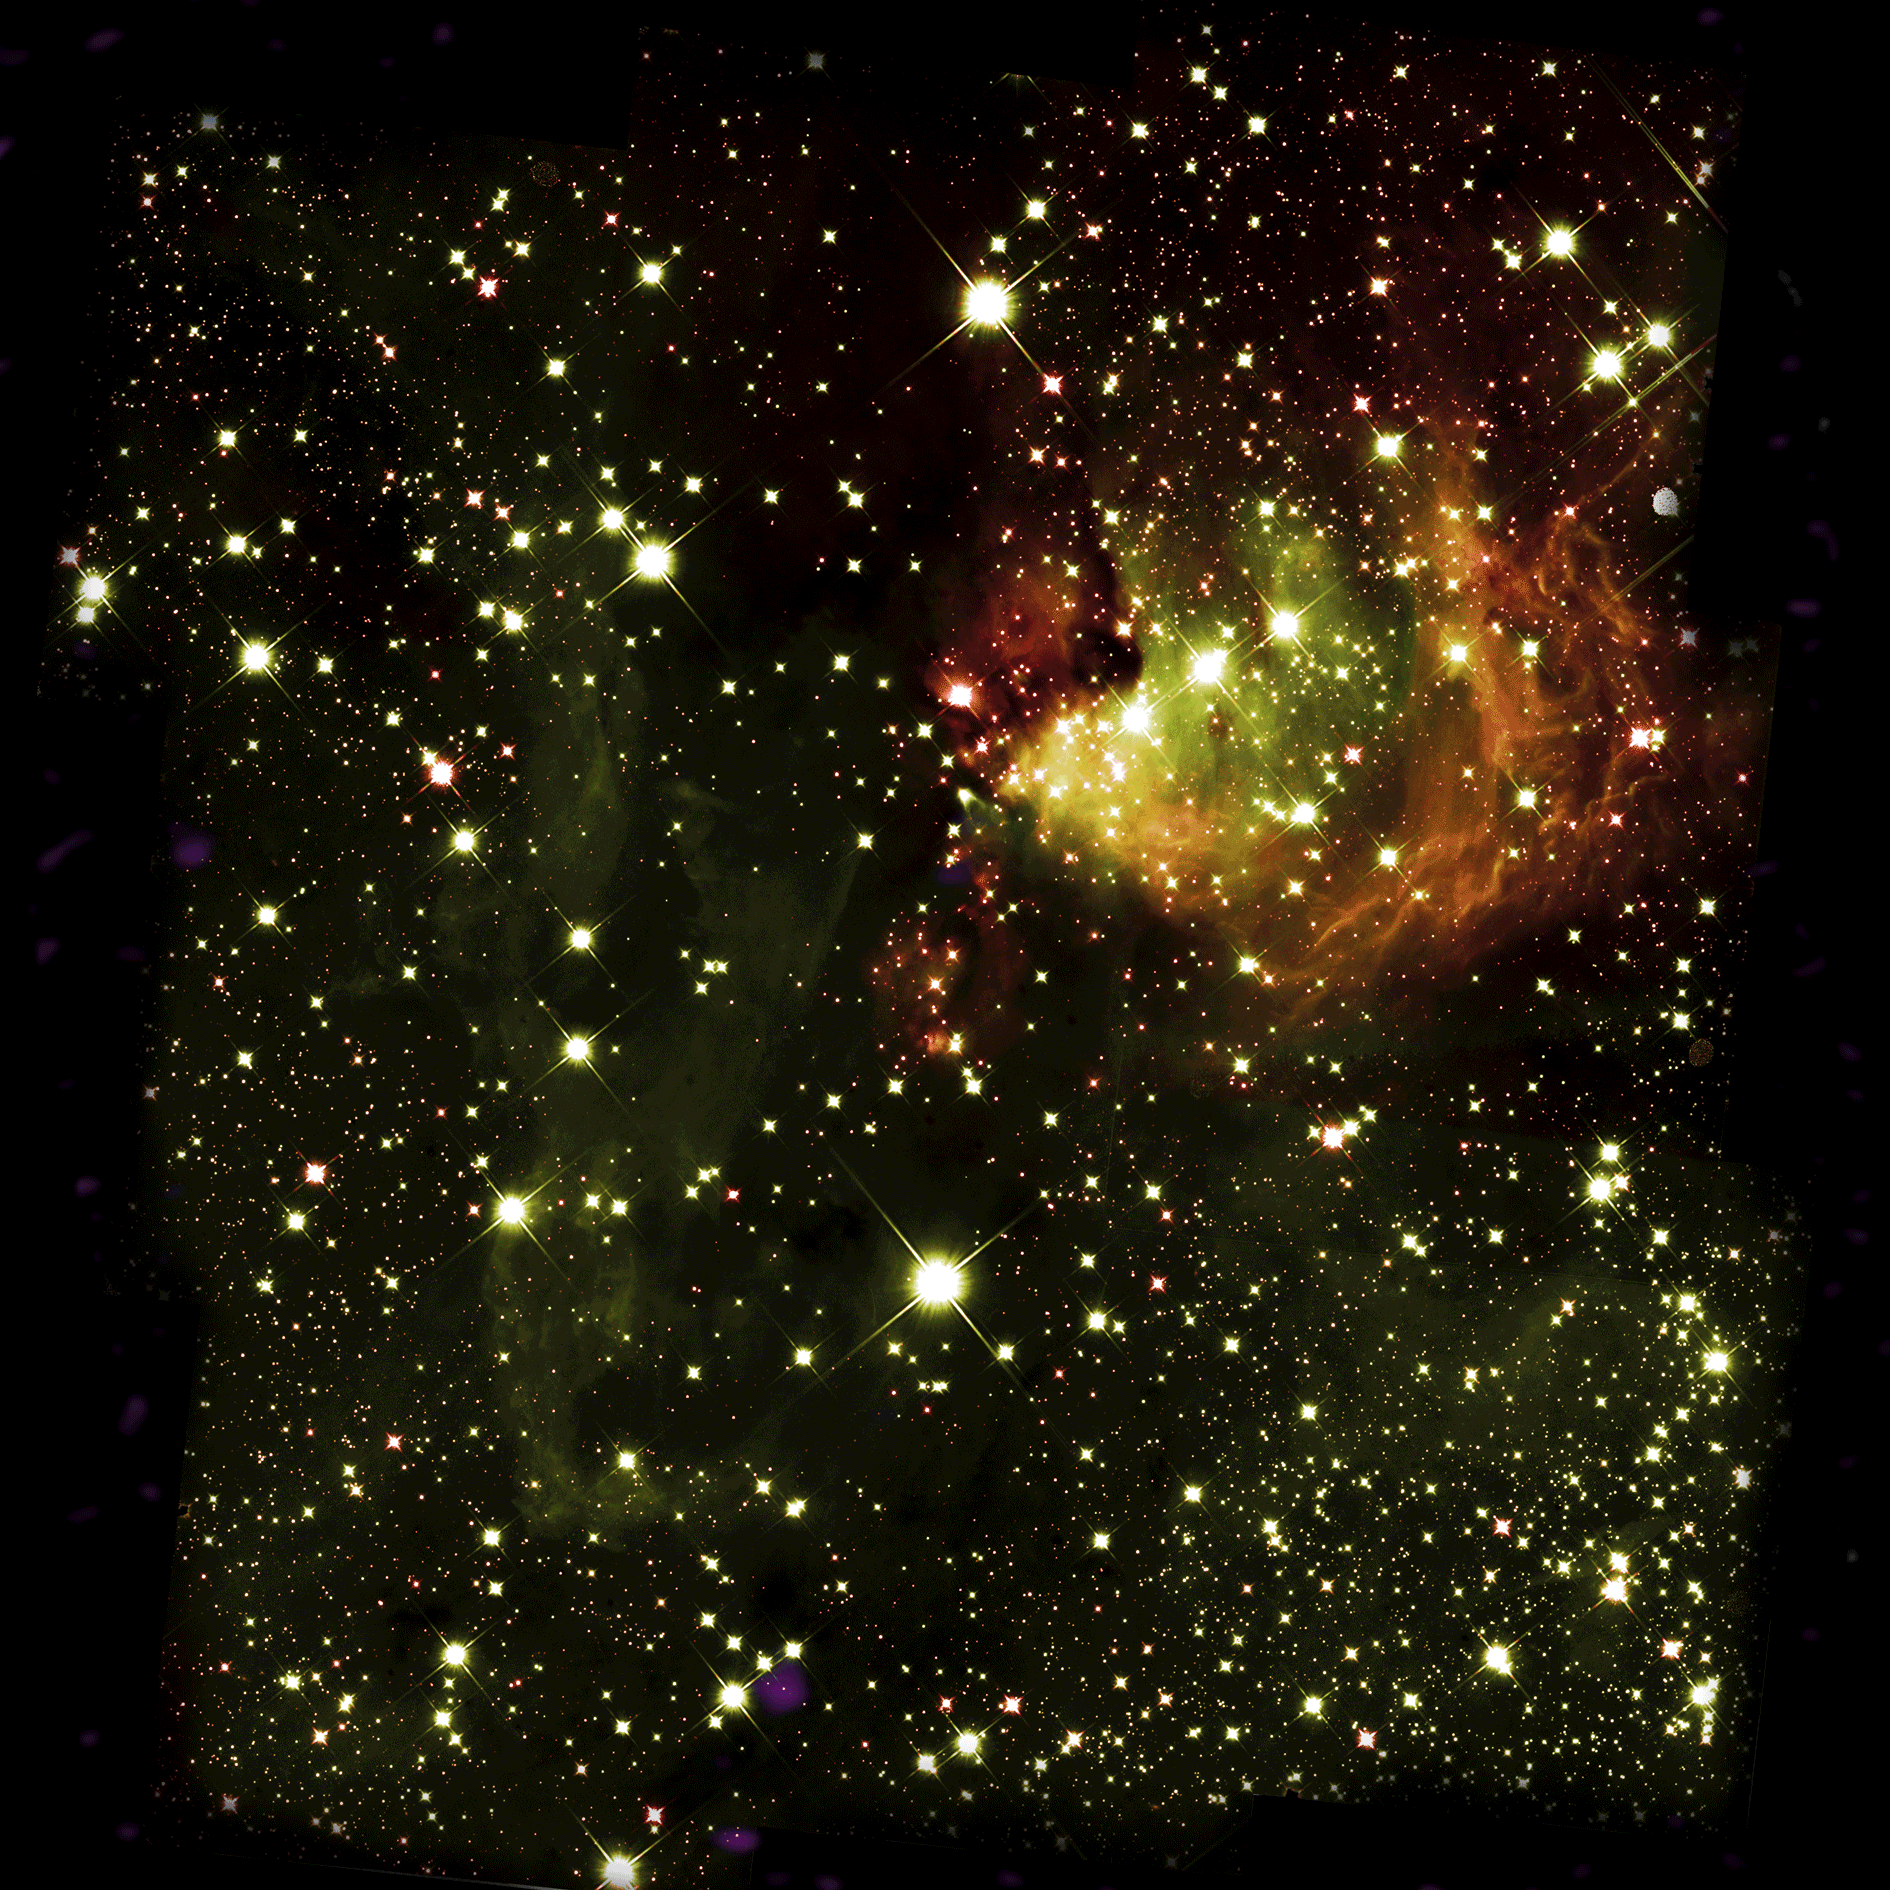 ALMA Mosaic Star Cluster (animated gif)